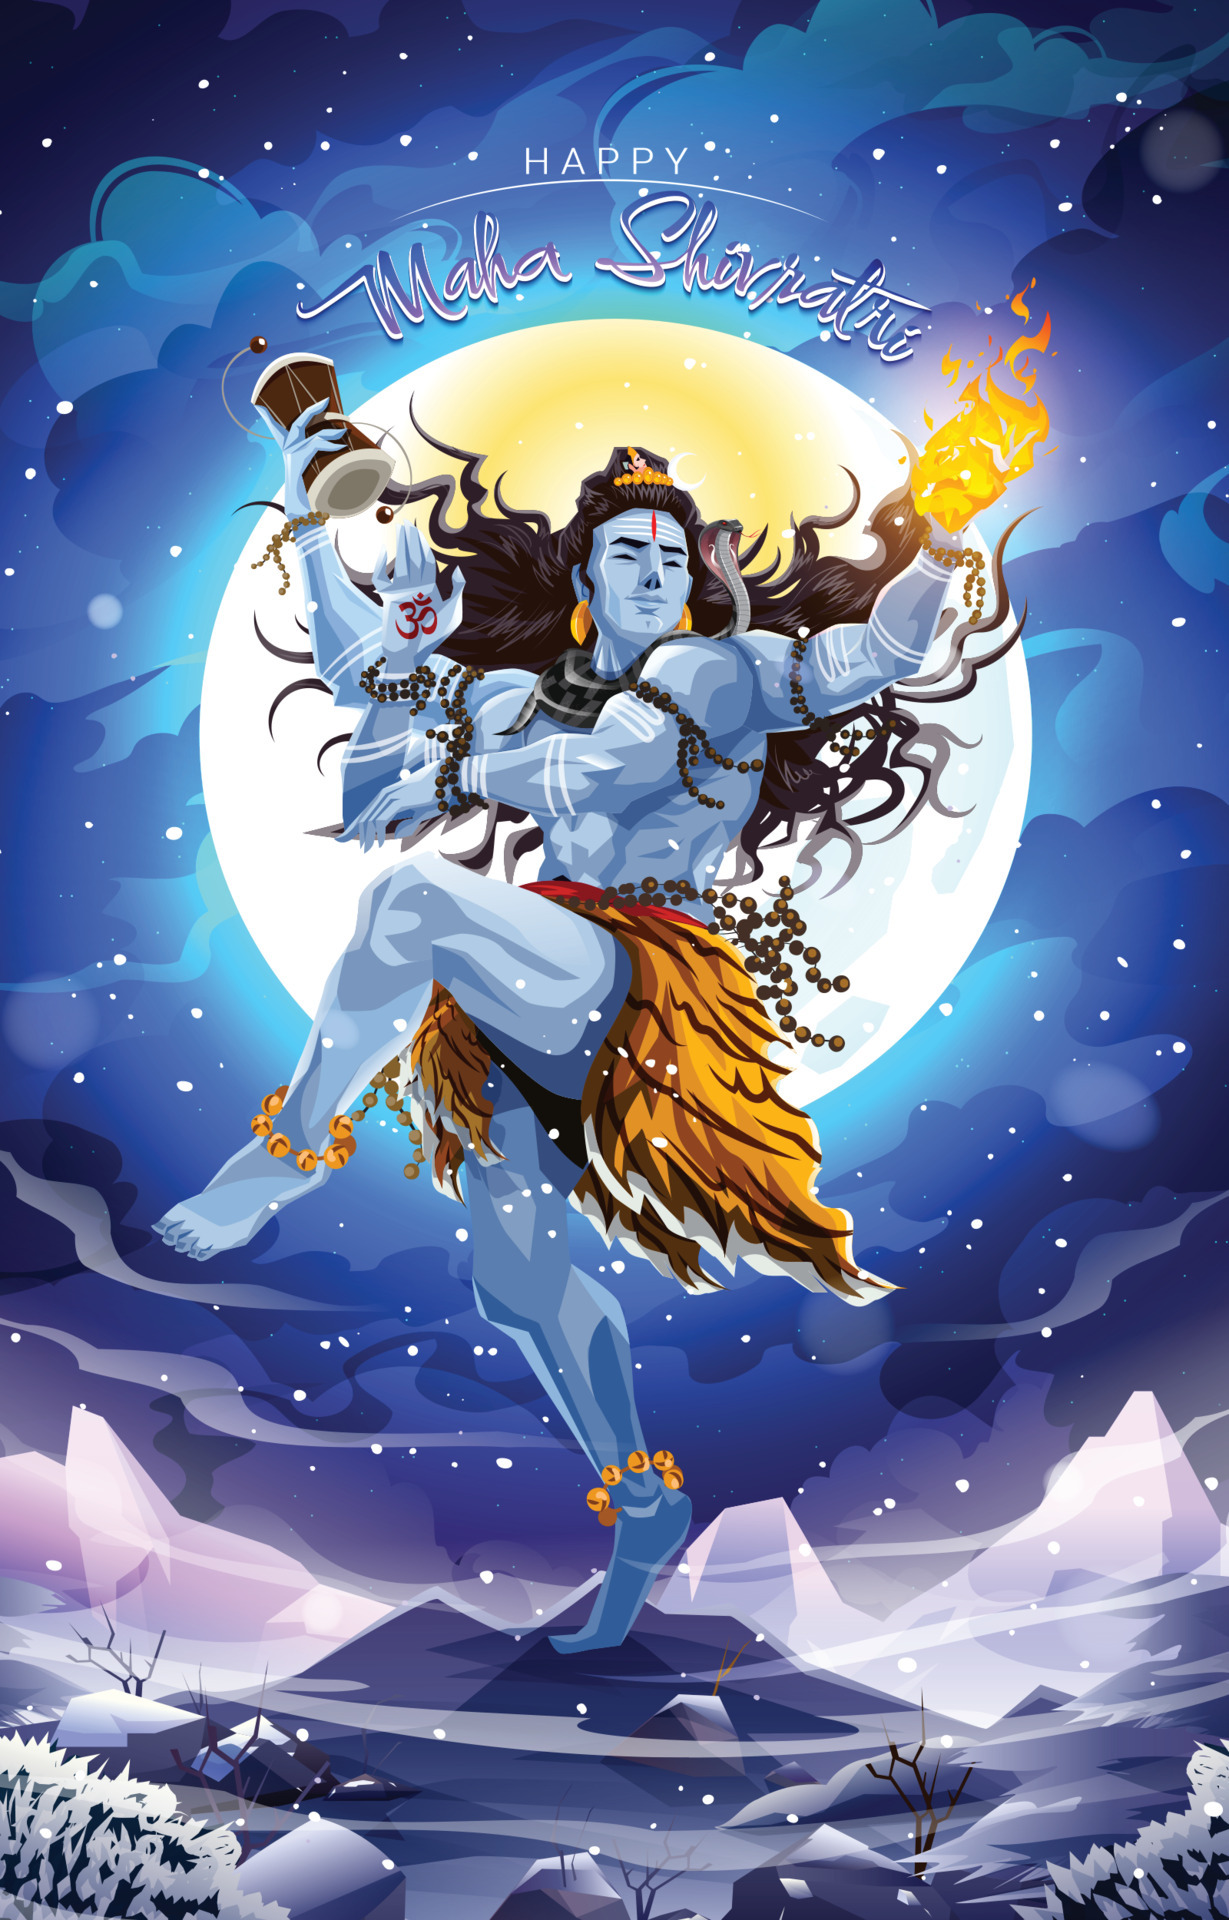 Happy Maha Shivratri With Lord Shiva Dancing by The Moon 4552924 Vector Art  at Vecteezy